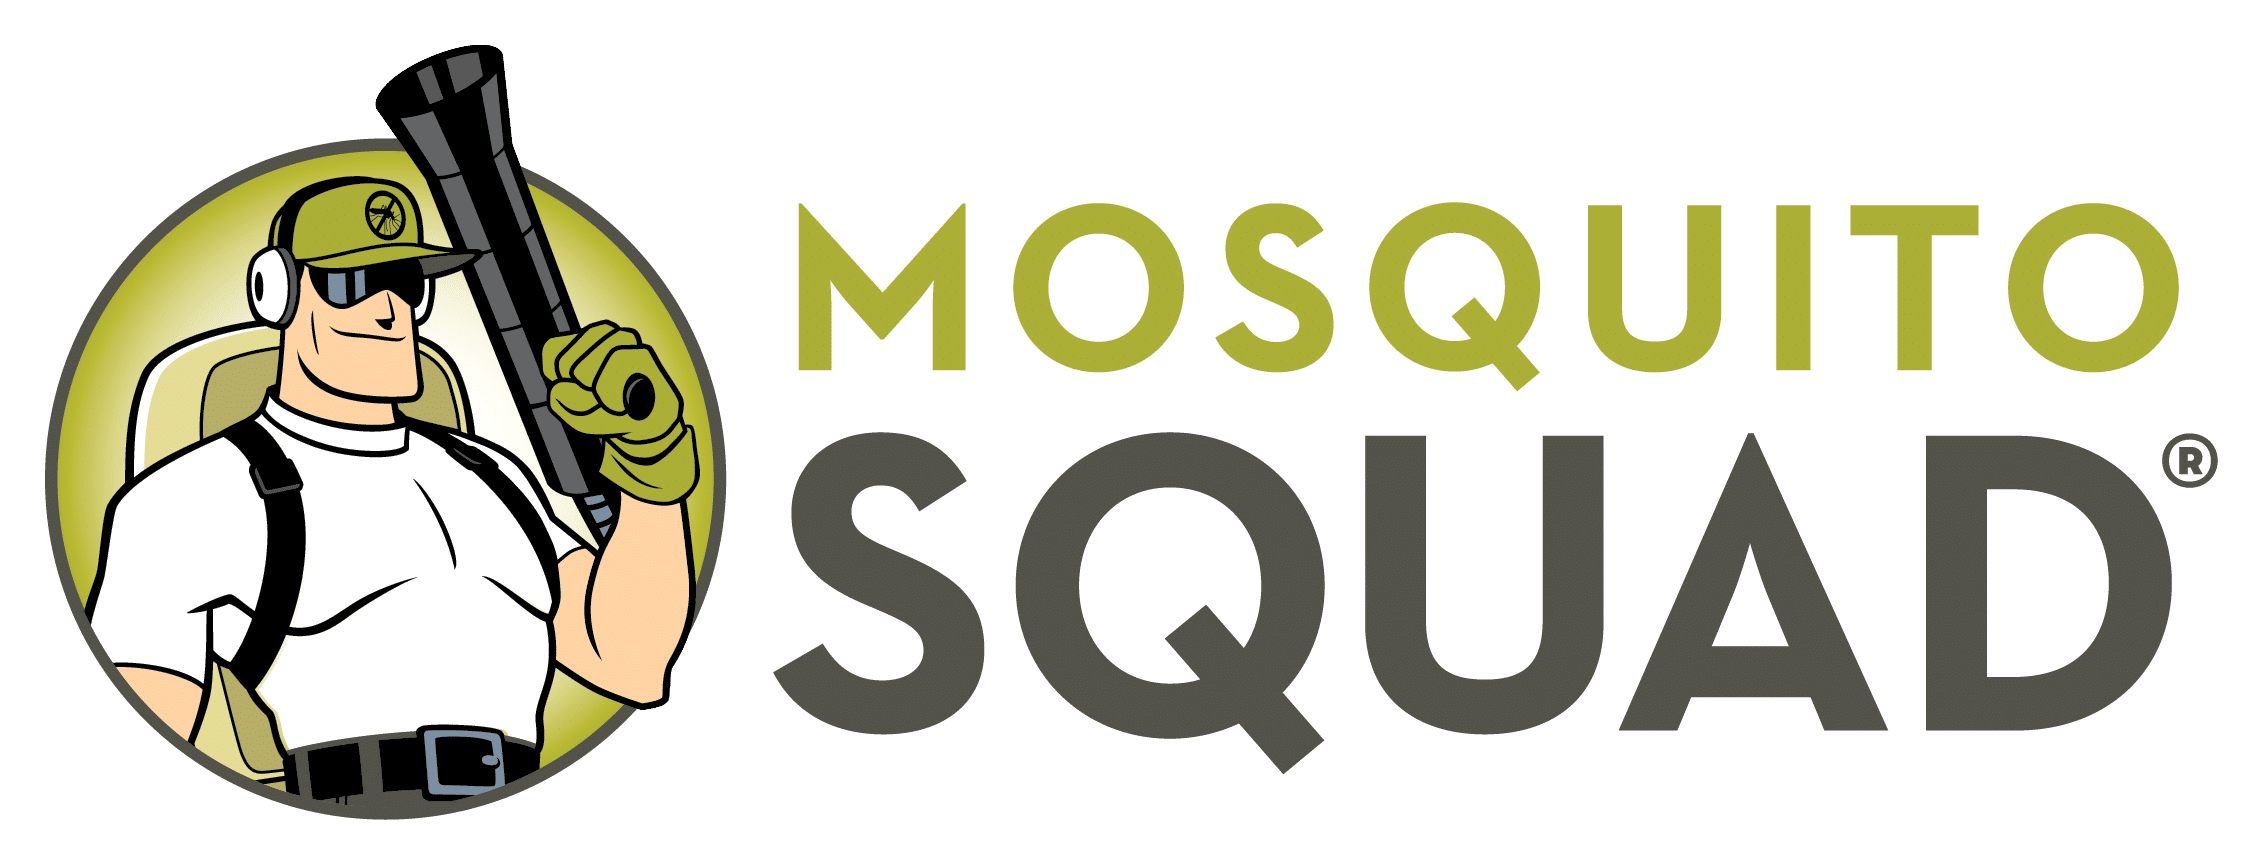 New Mosquito Squad logo RGB